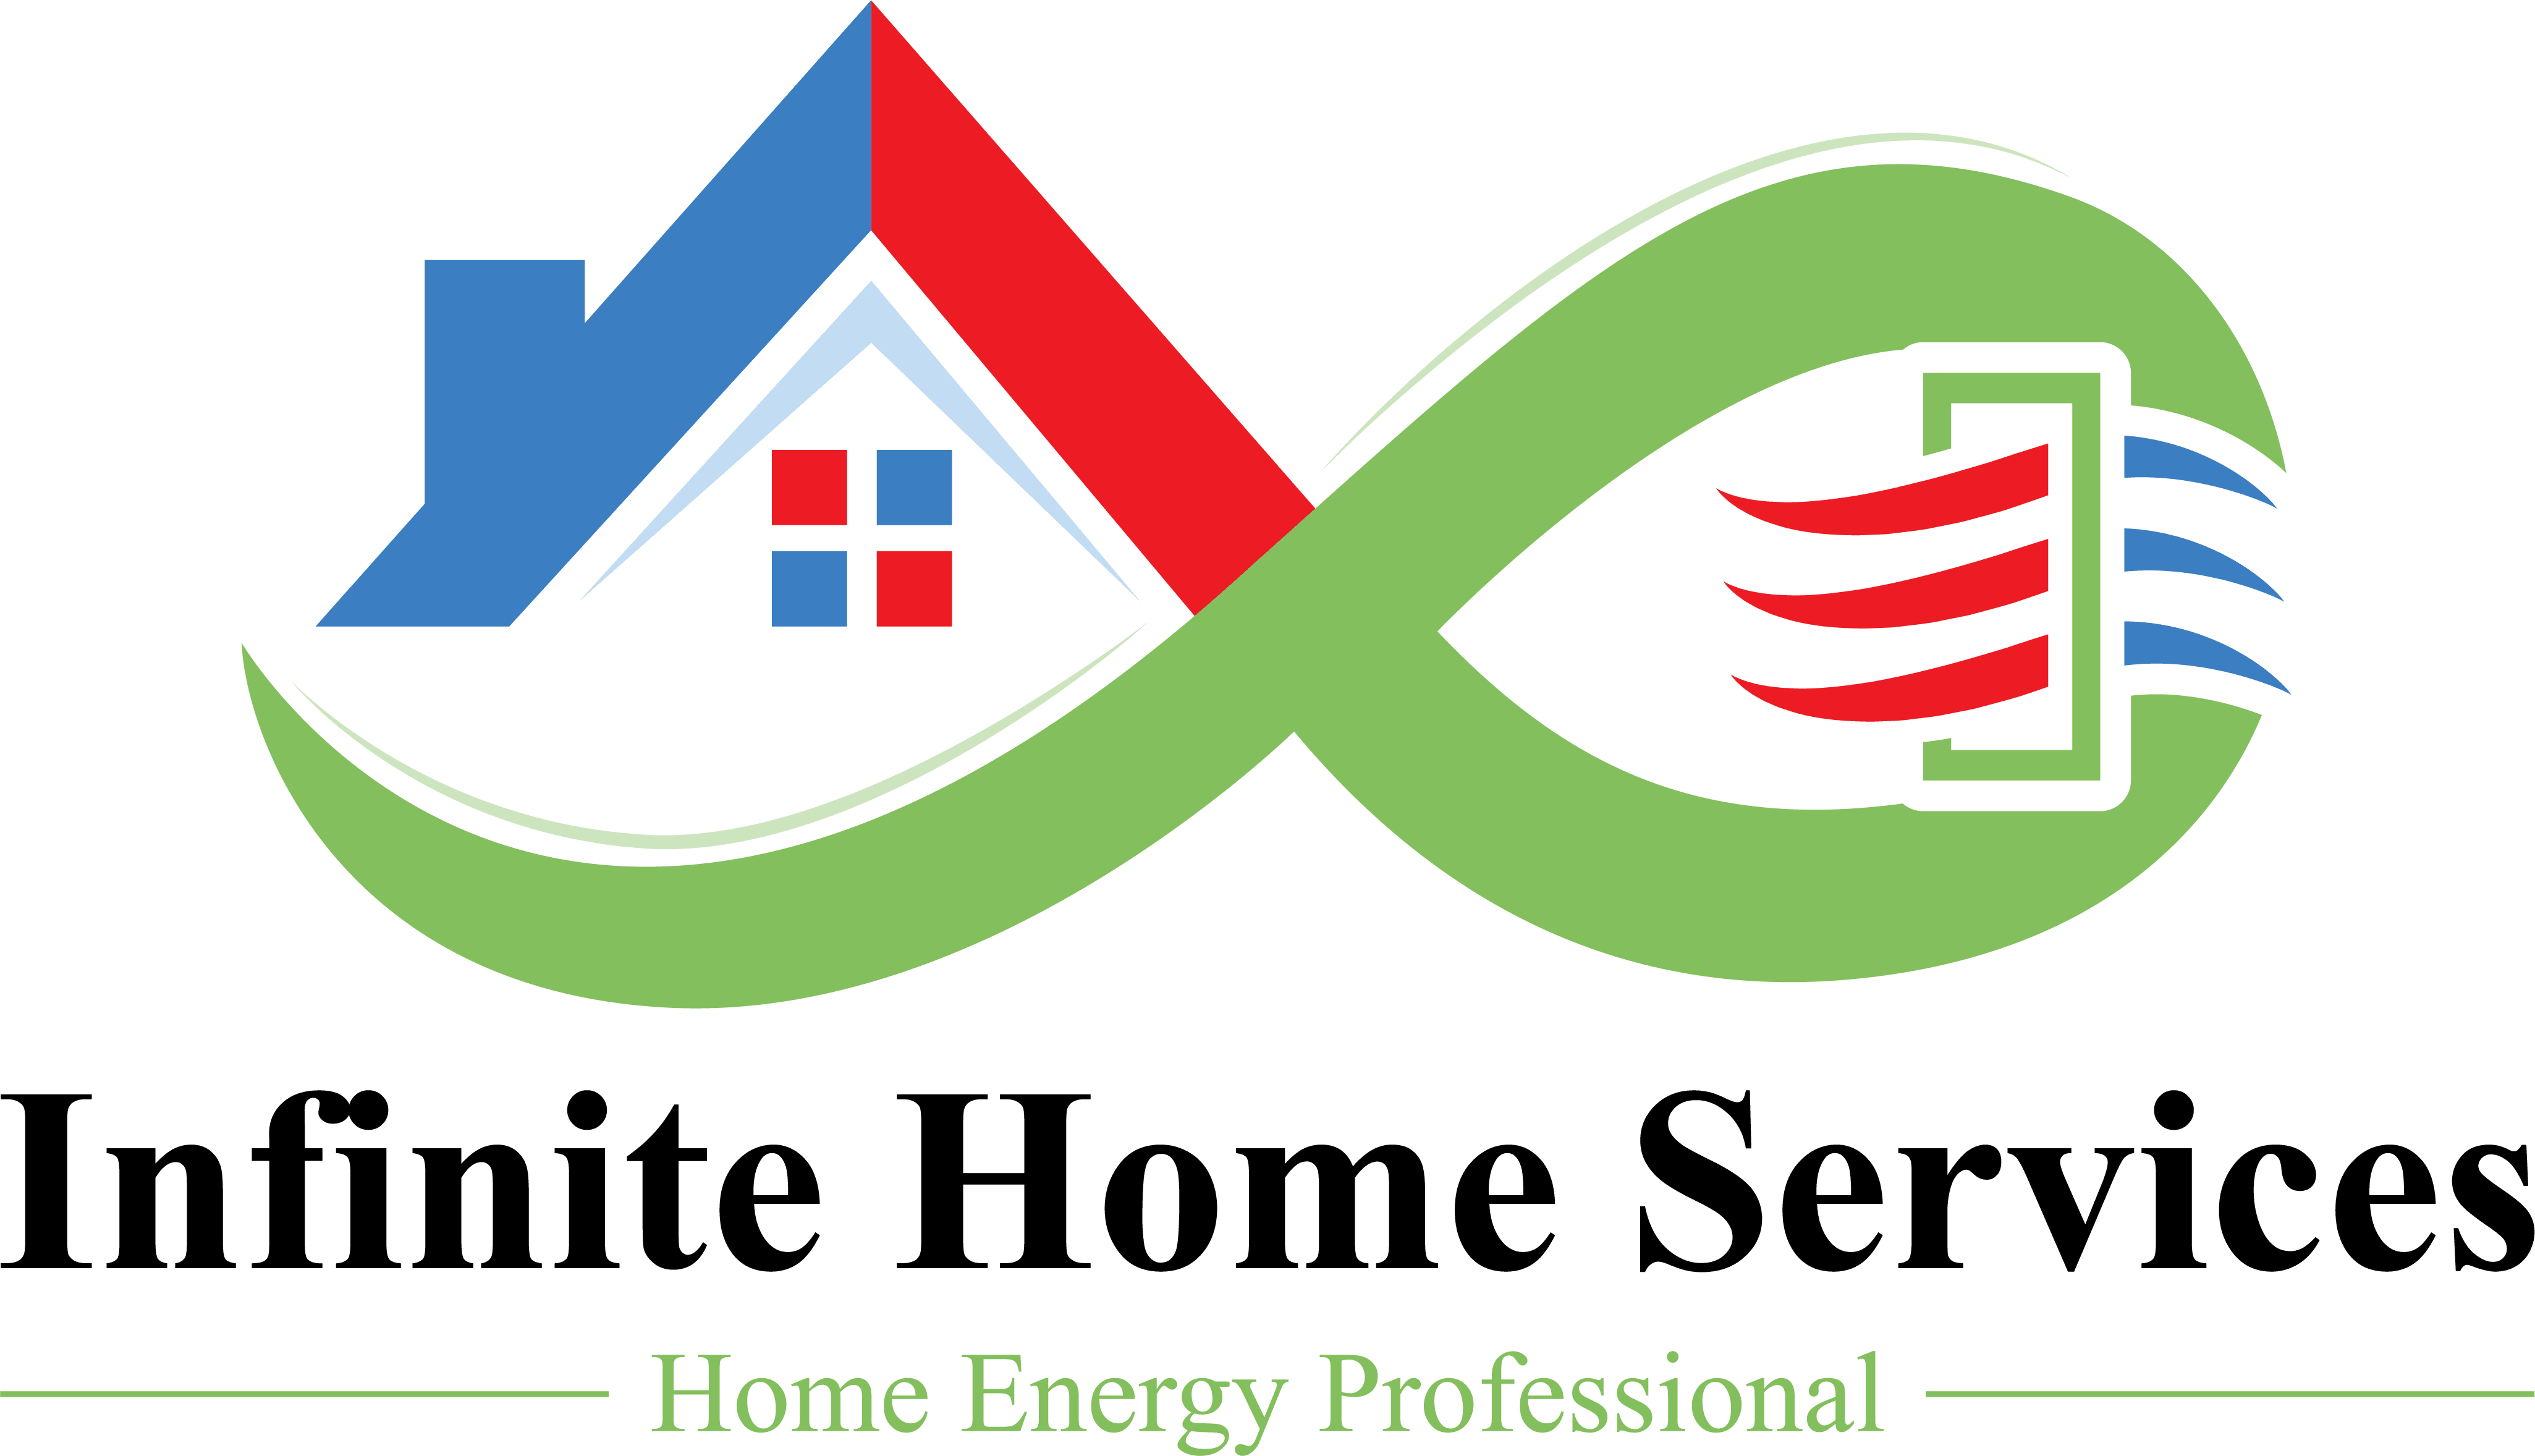 Infinite Home Services Inc's logo